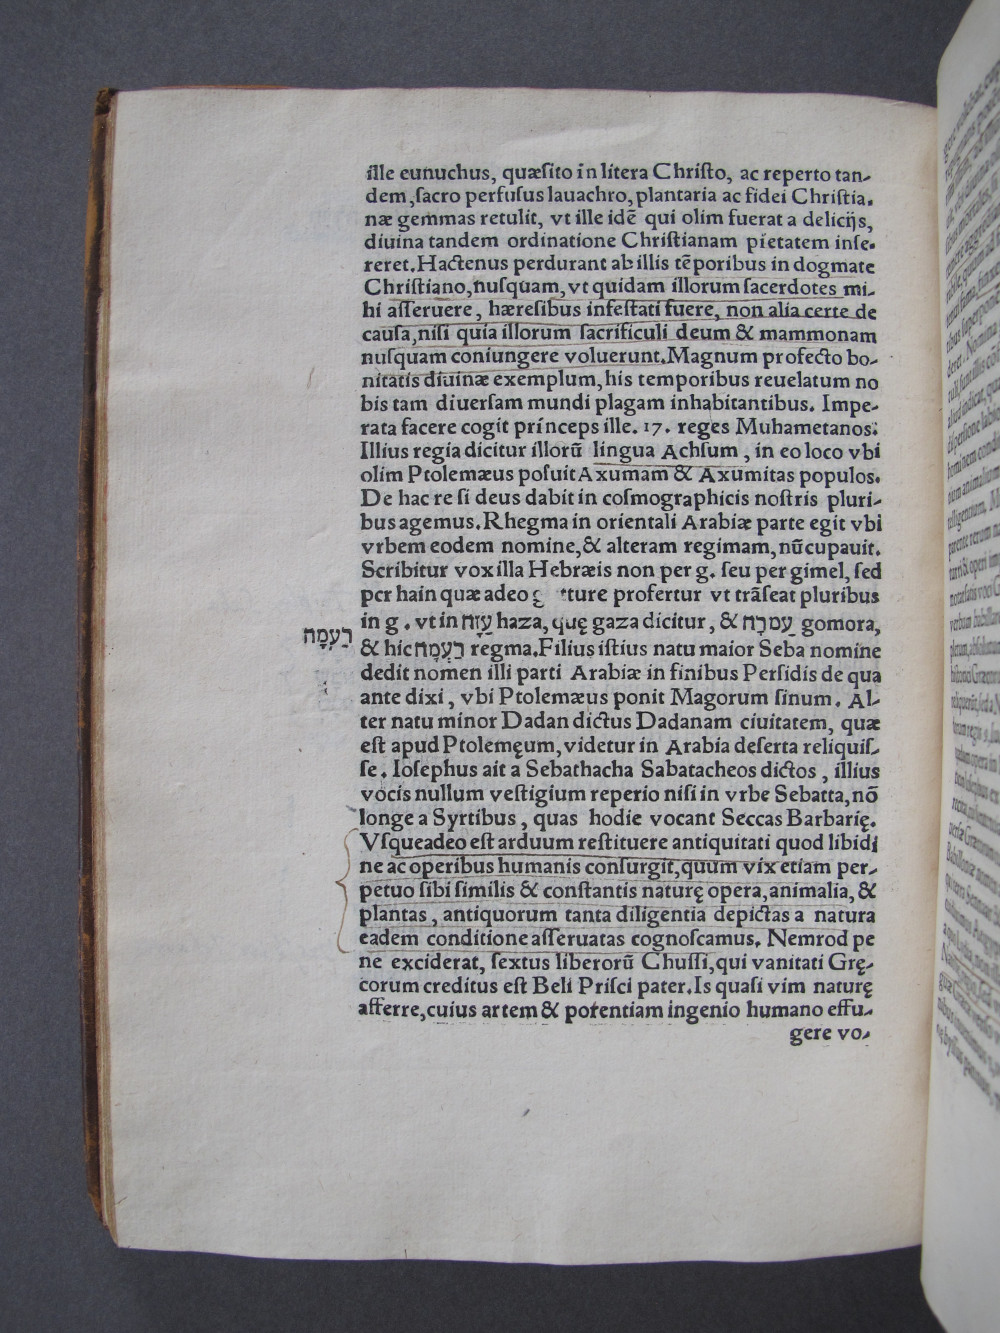 Folio B4 verso